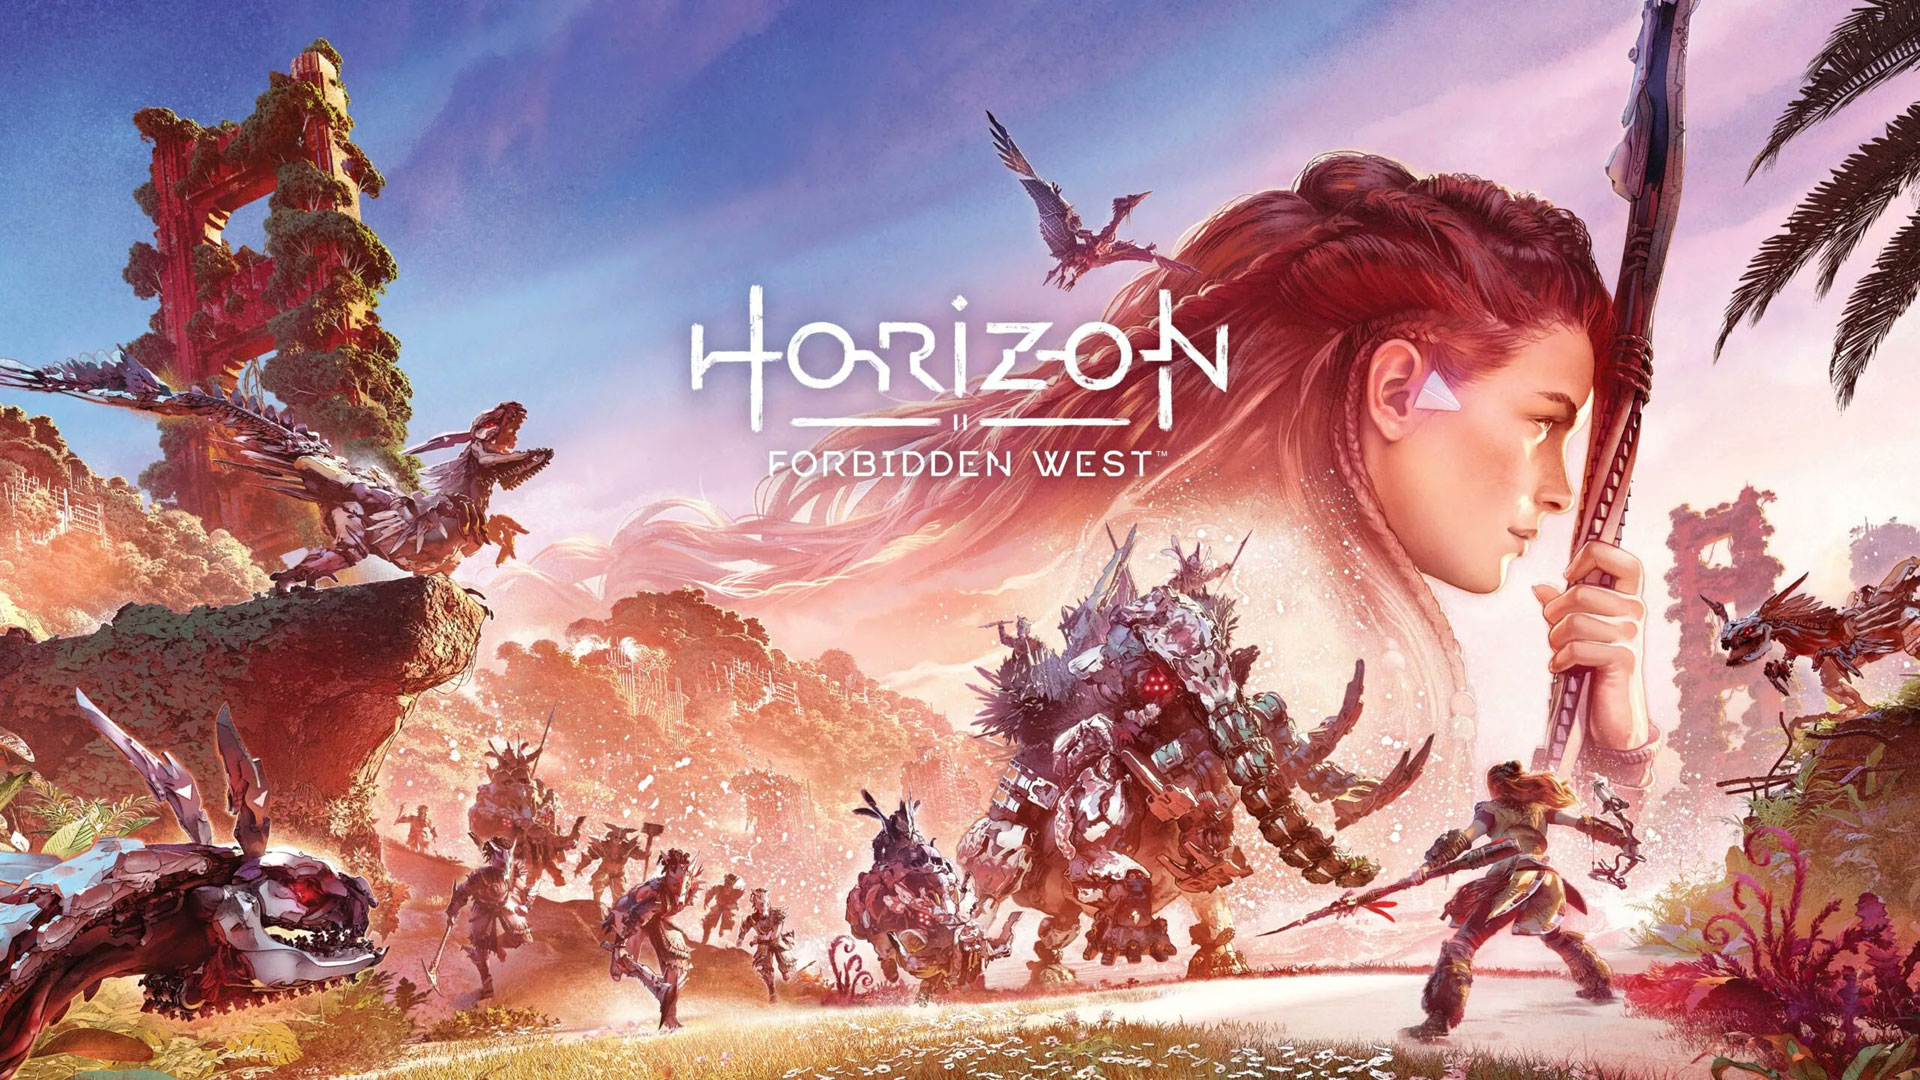 Horizon Forbidden West developers share cool new gameplay details